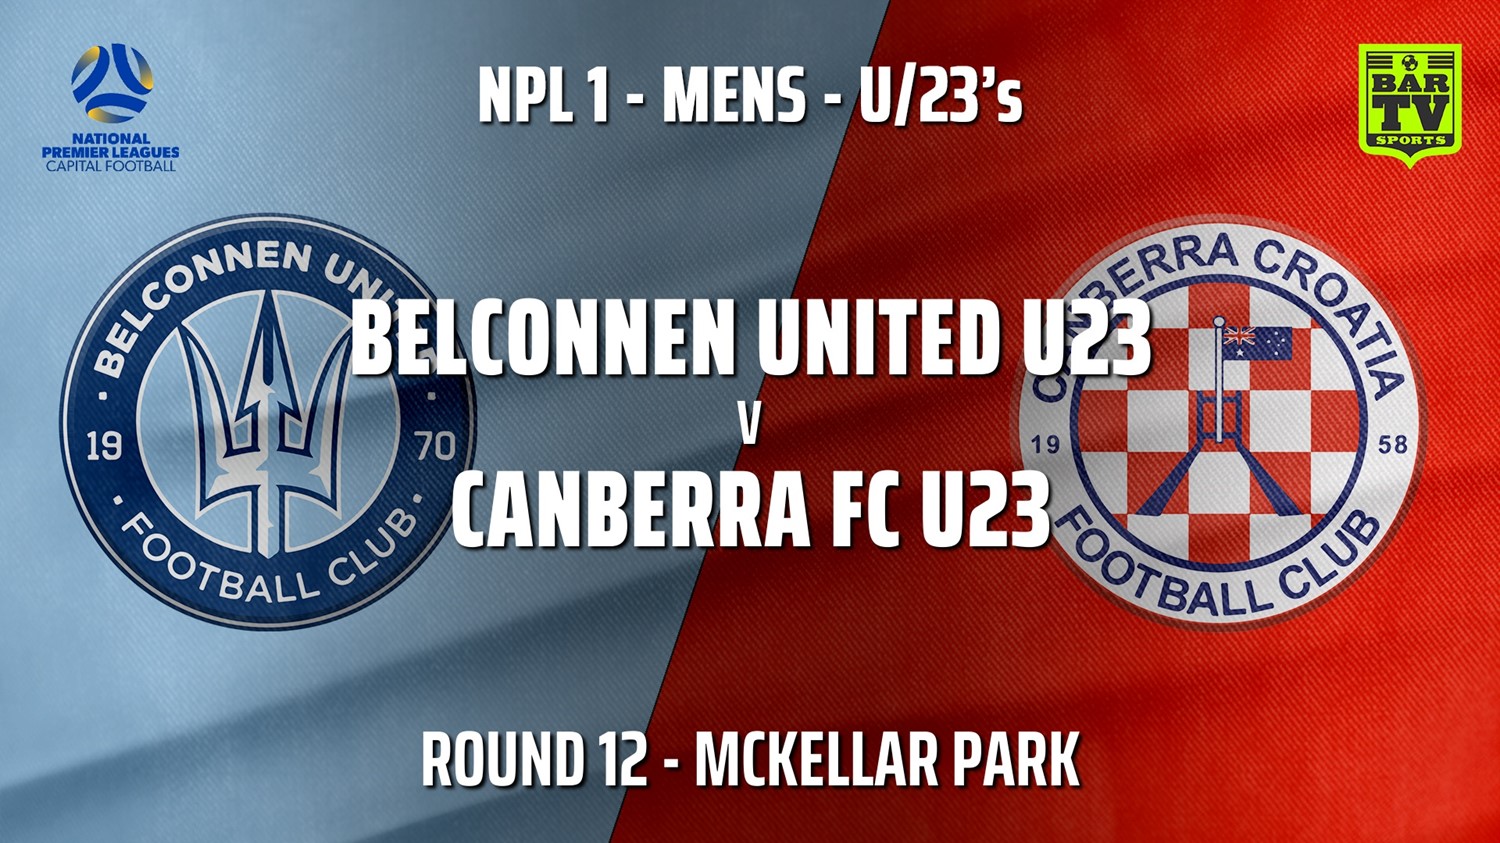 210703-Capital NPL U23 Round 12 - Belconnen United U23 v Canberra FC U23 Minigame Slate Image